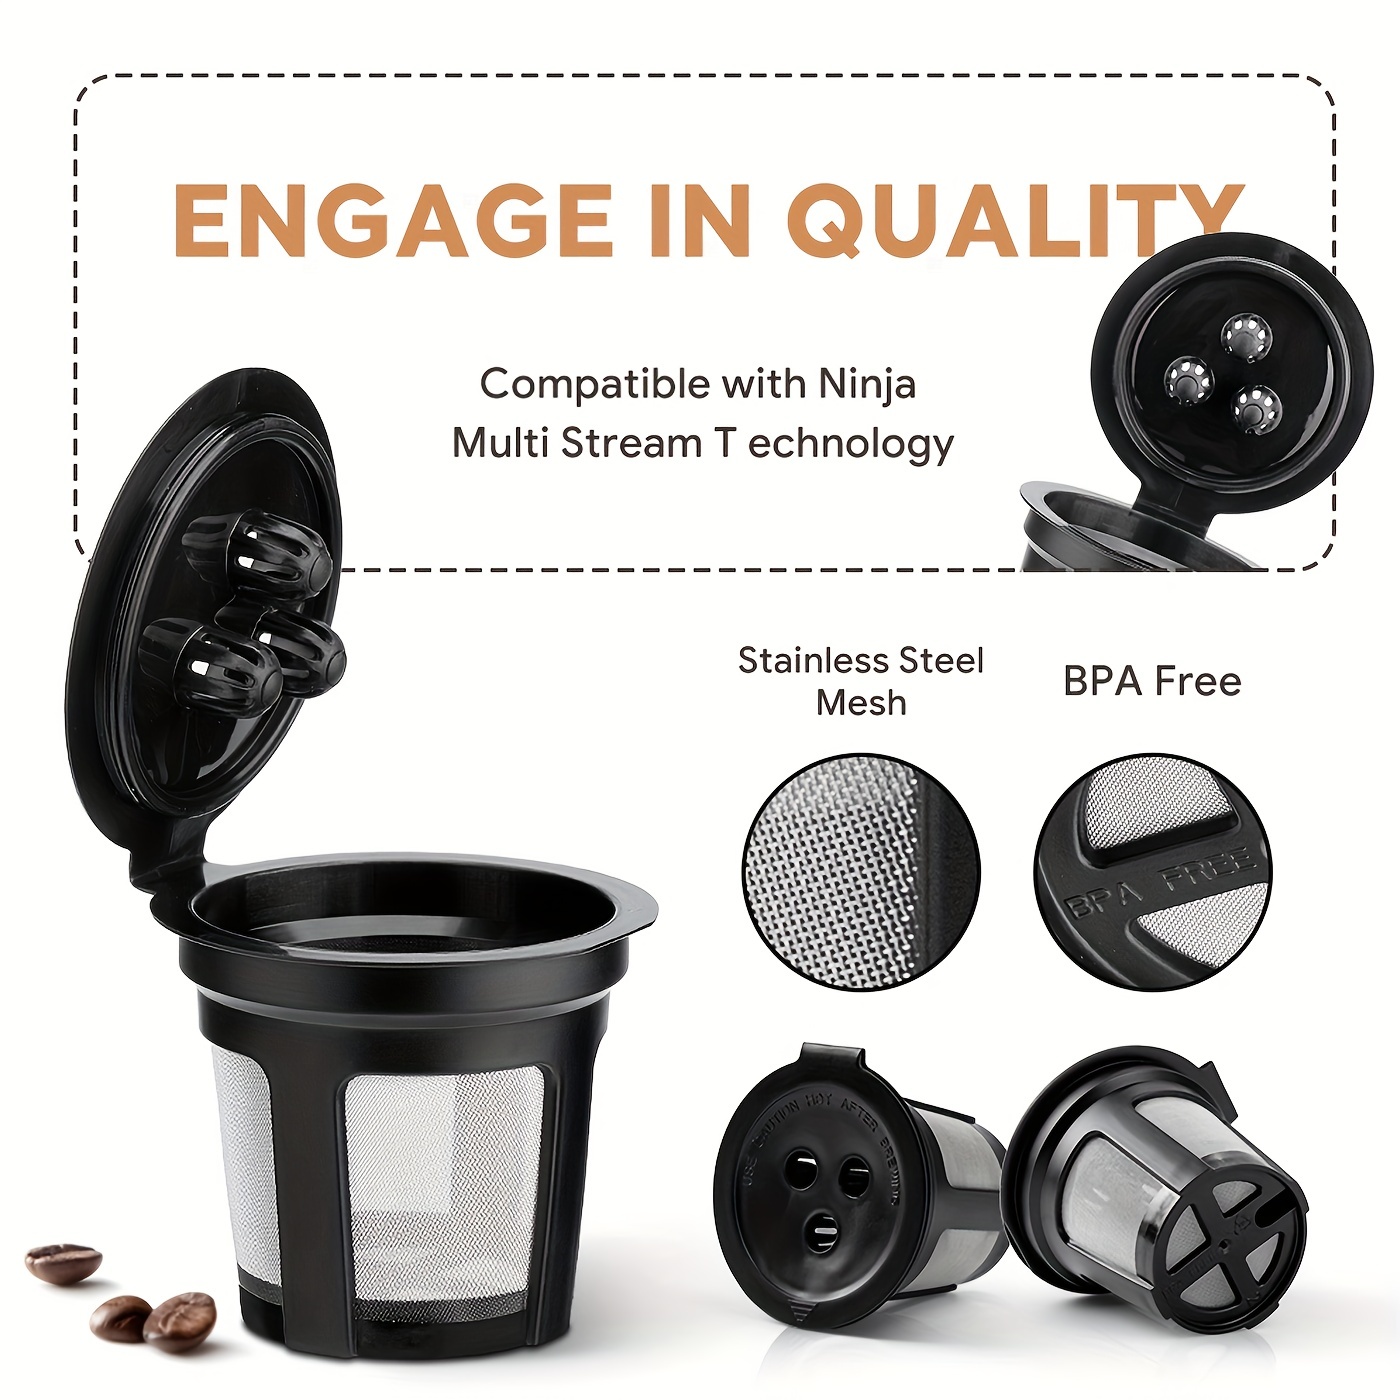 Reusable Coffee Filter For Ninja Dual Brew Coffee Maker - Temu